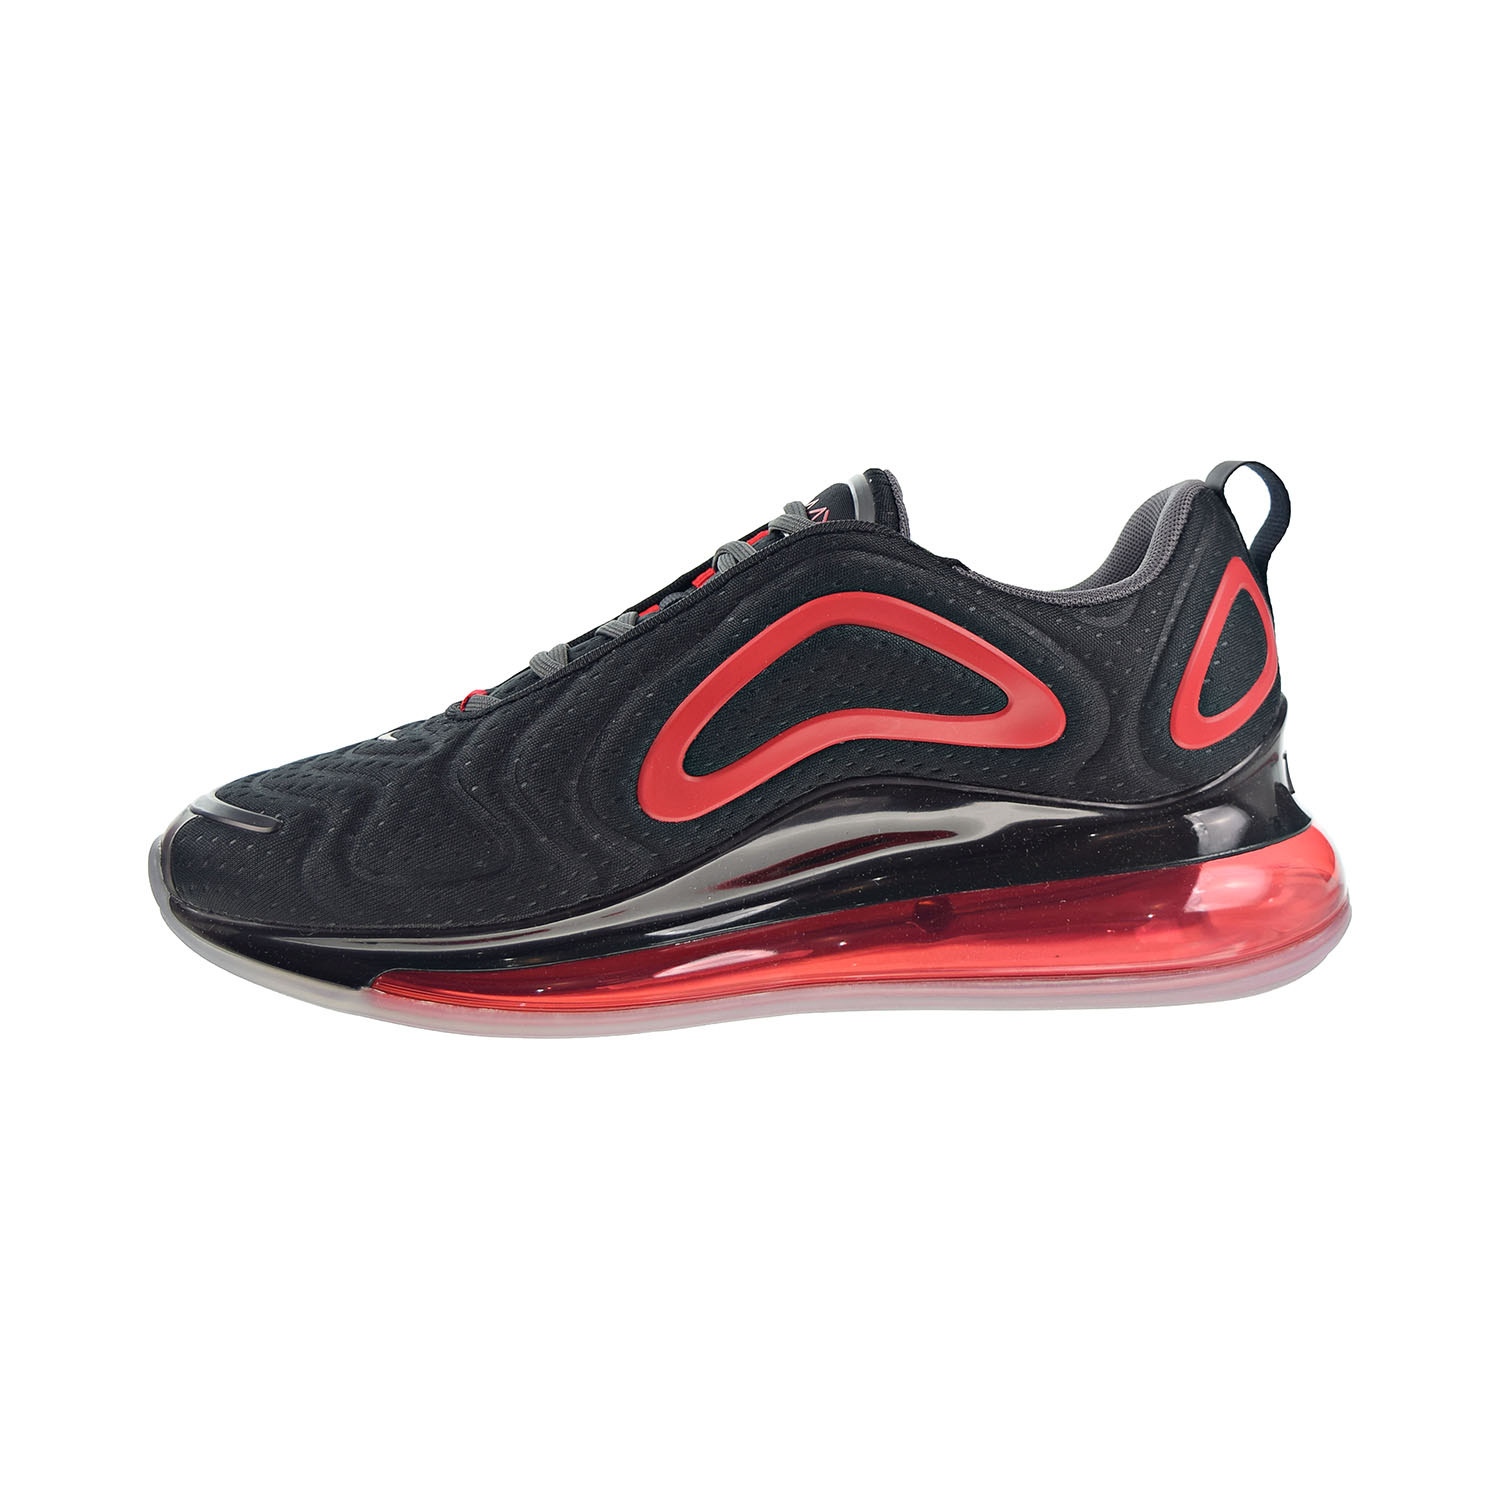 Nike Air Max 720-Mesh Men's Shoes Black-University Red cn9833-001 - image 4 of 6